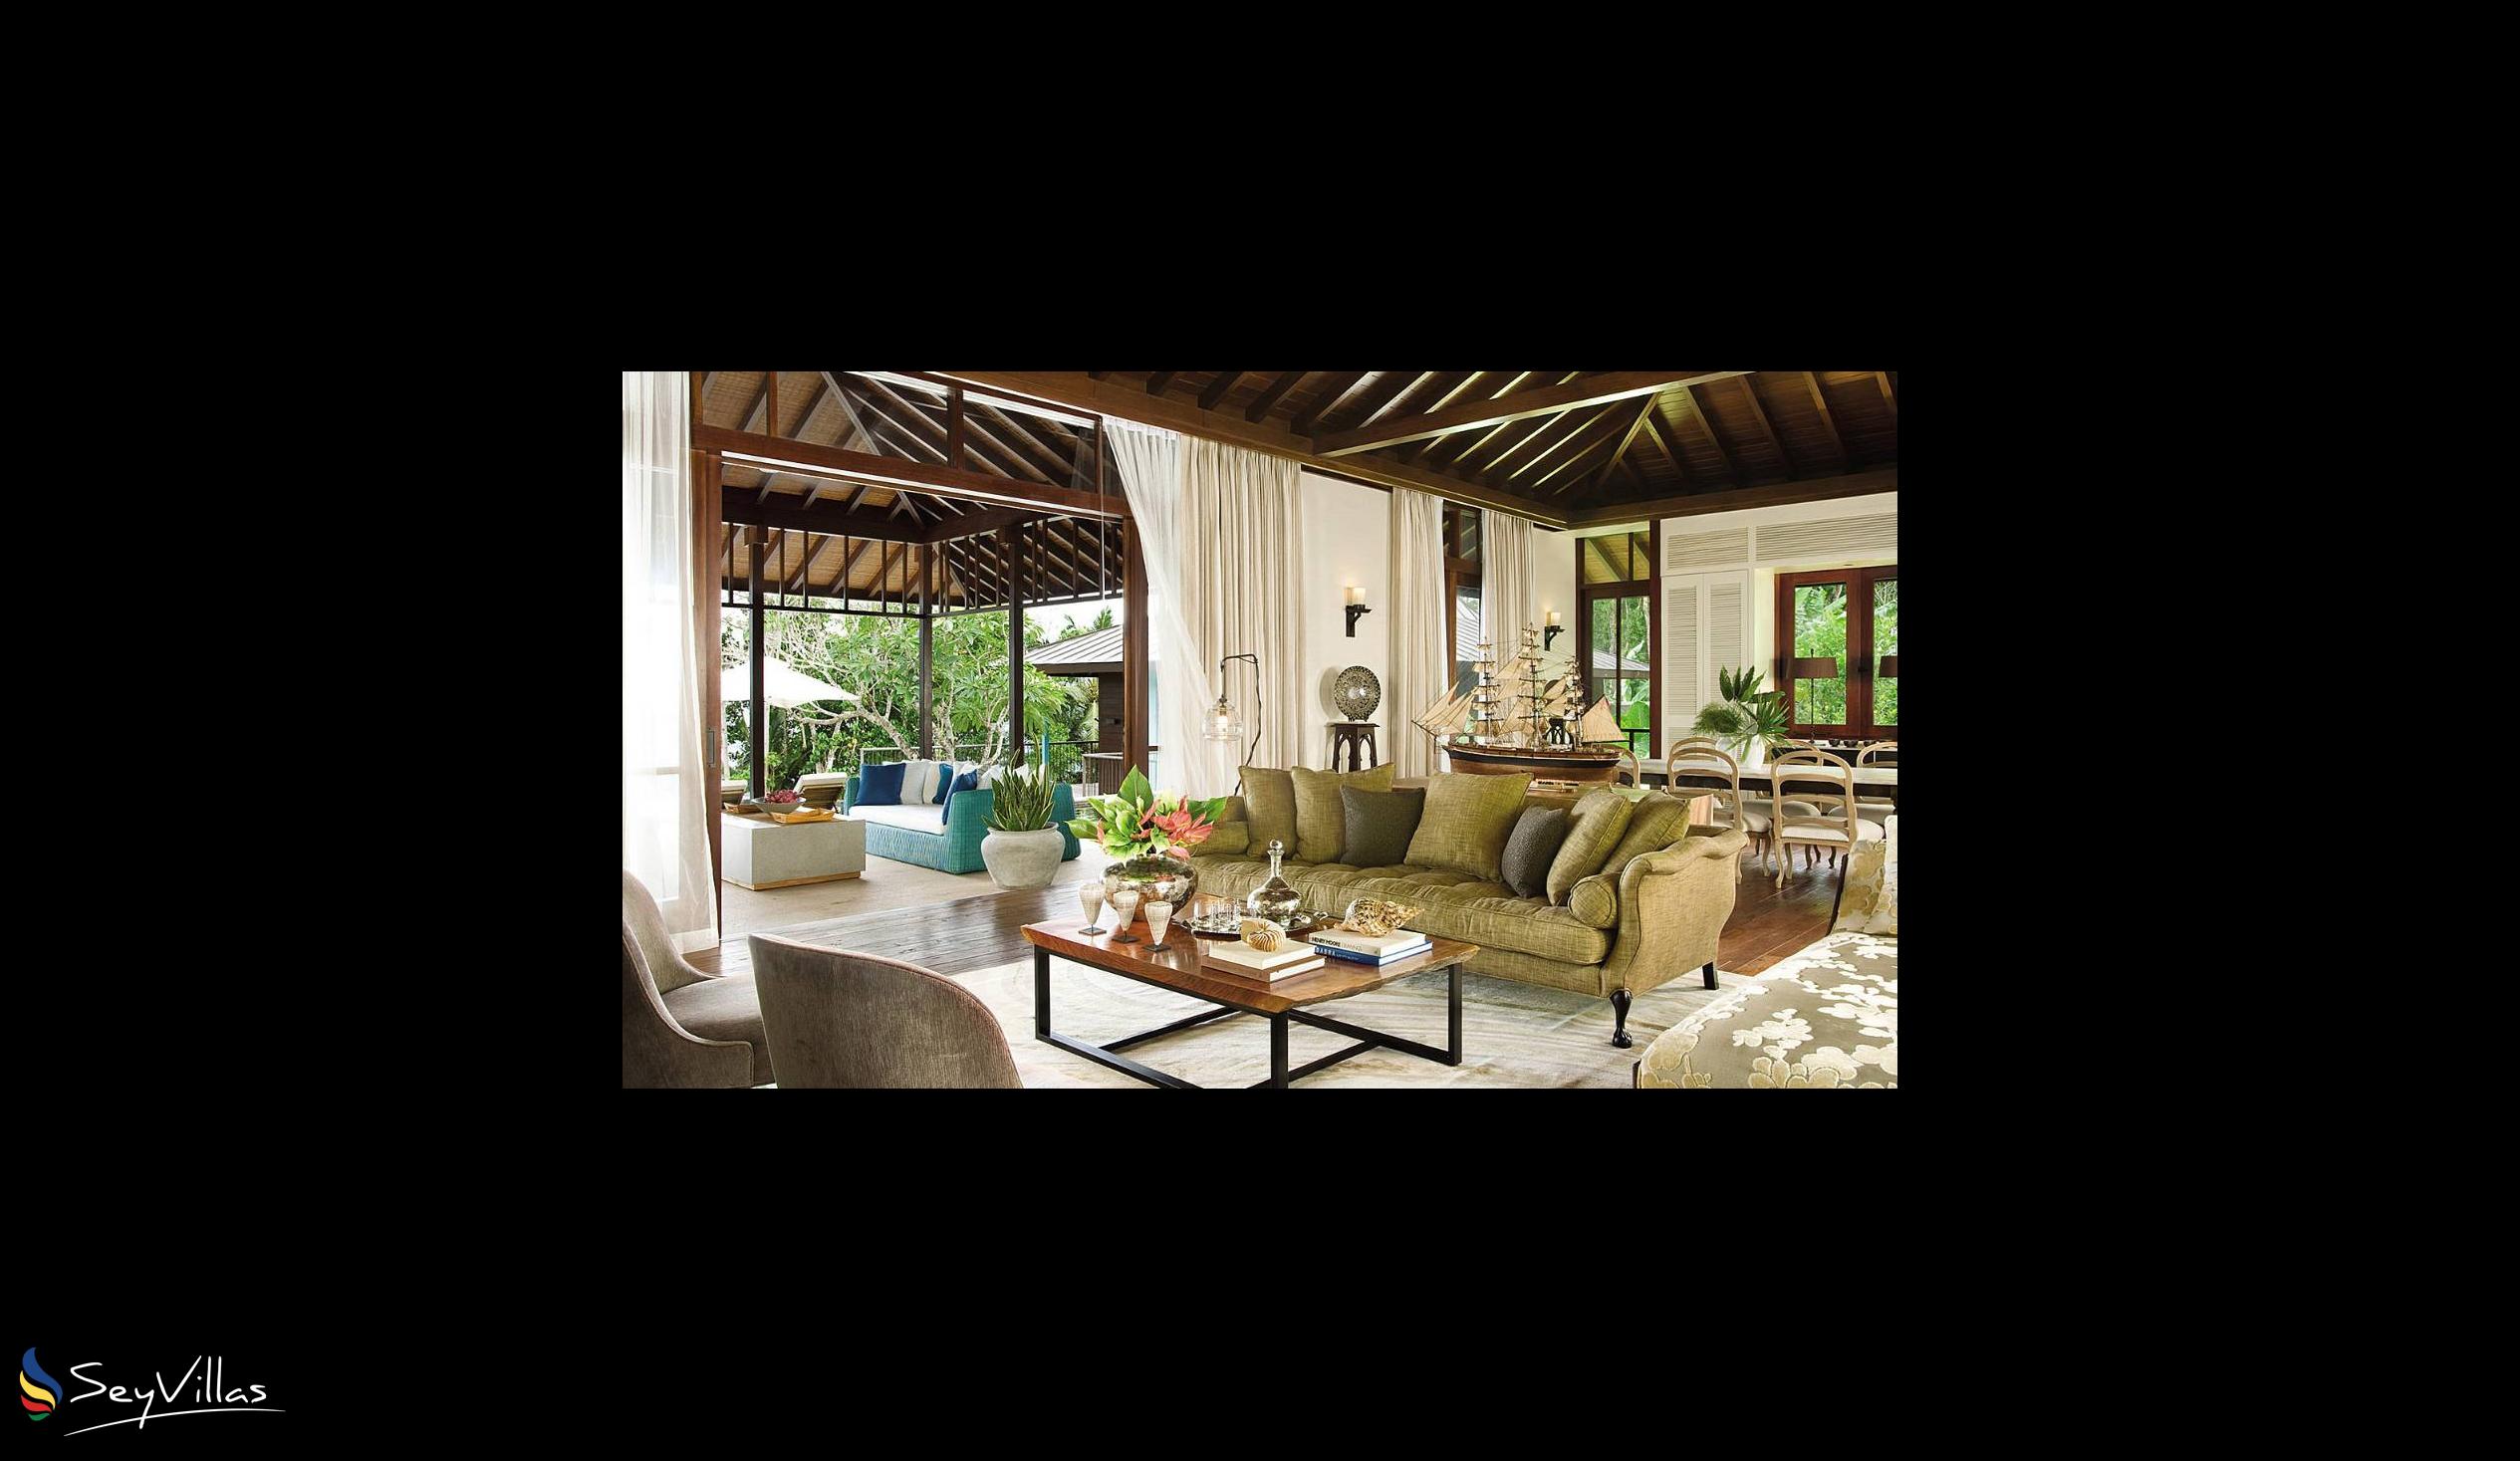 Foto 59: Four Seasons Resort - 3-Bedroom Presidential Suite - Mahé (Seychellen)